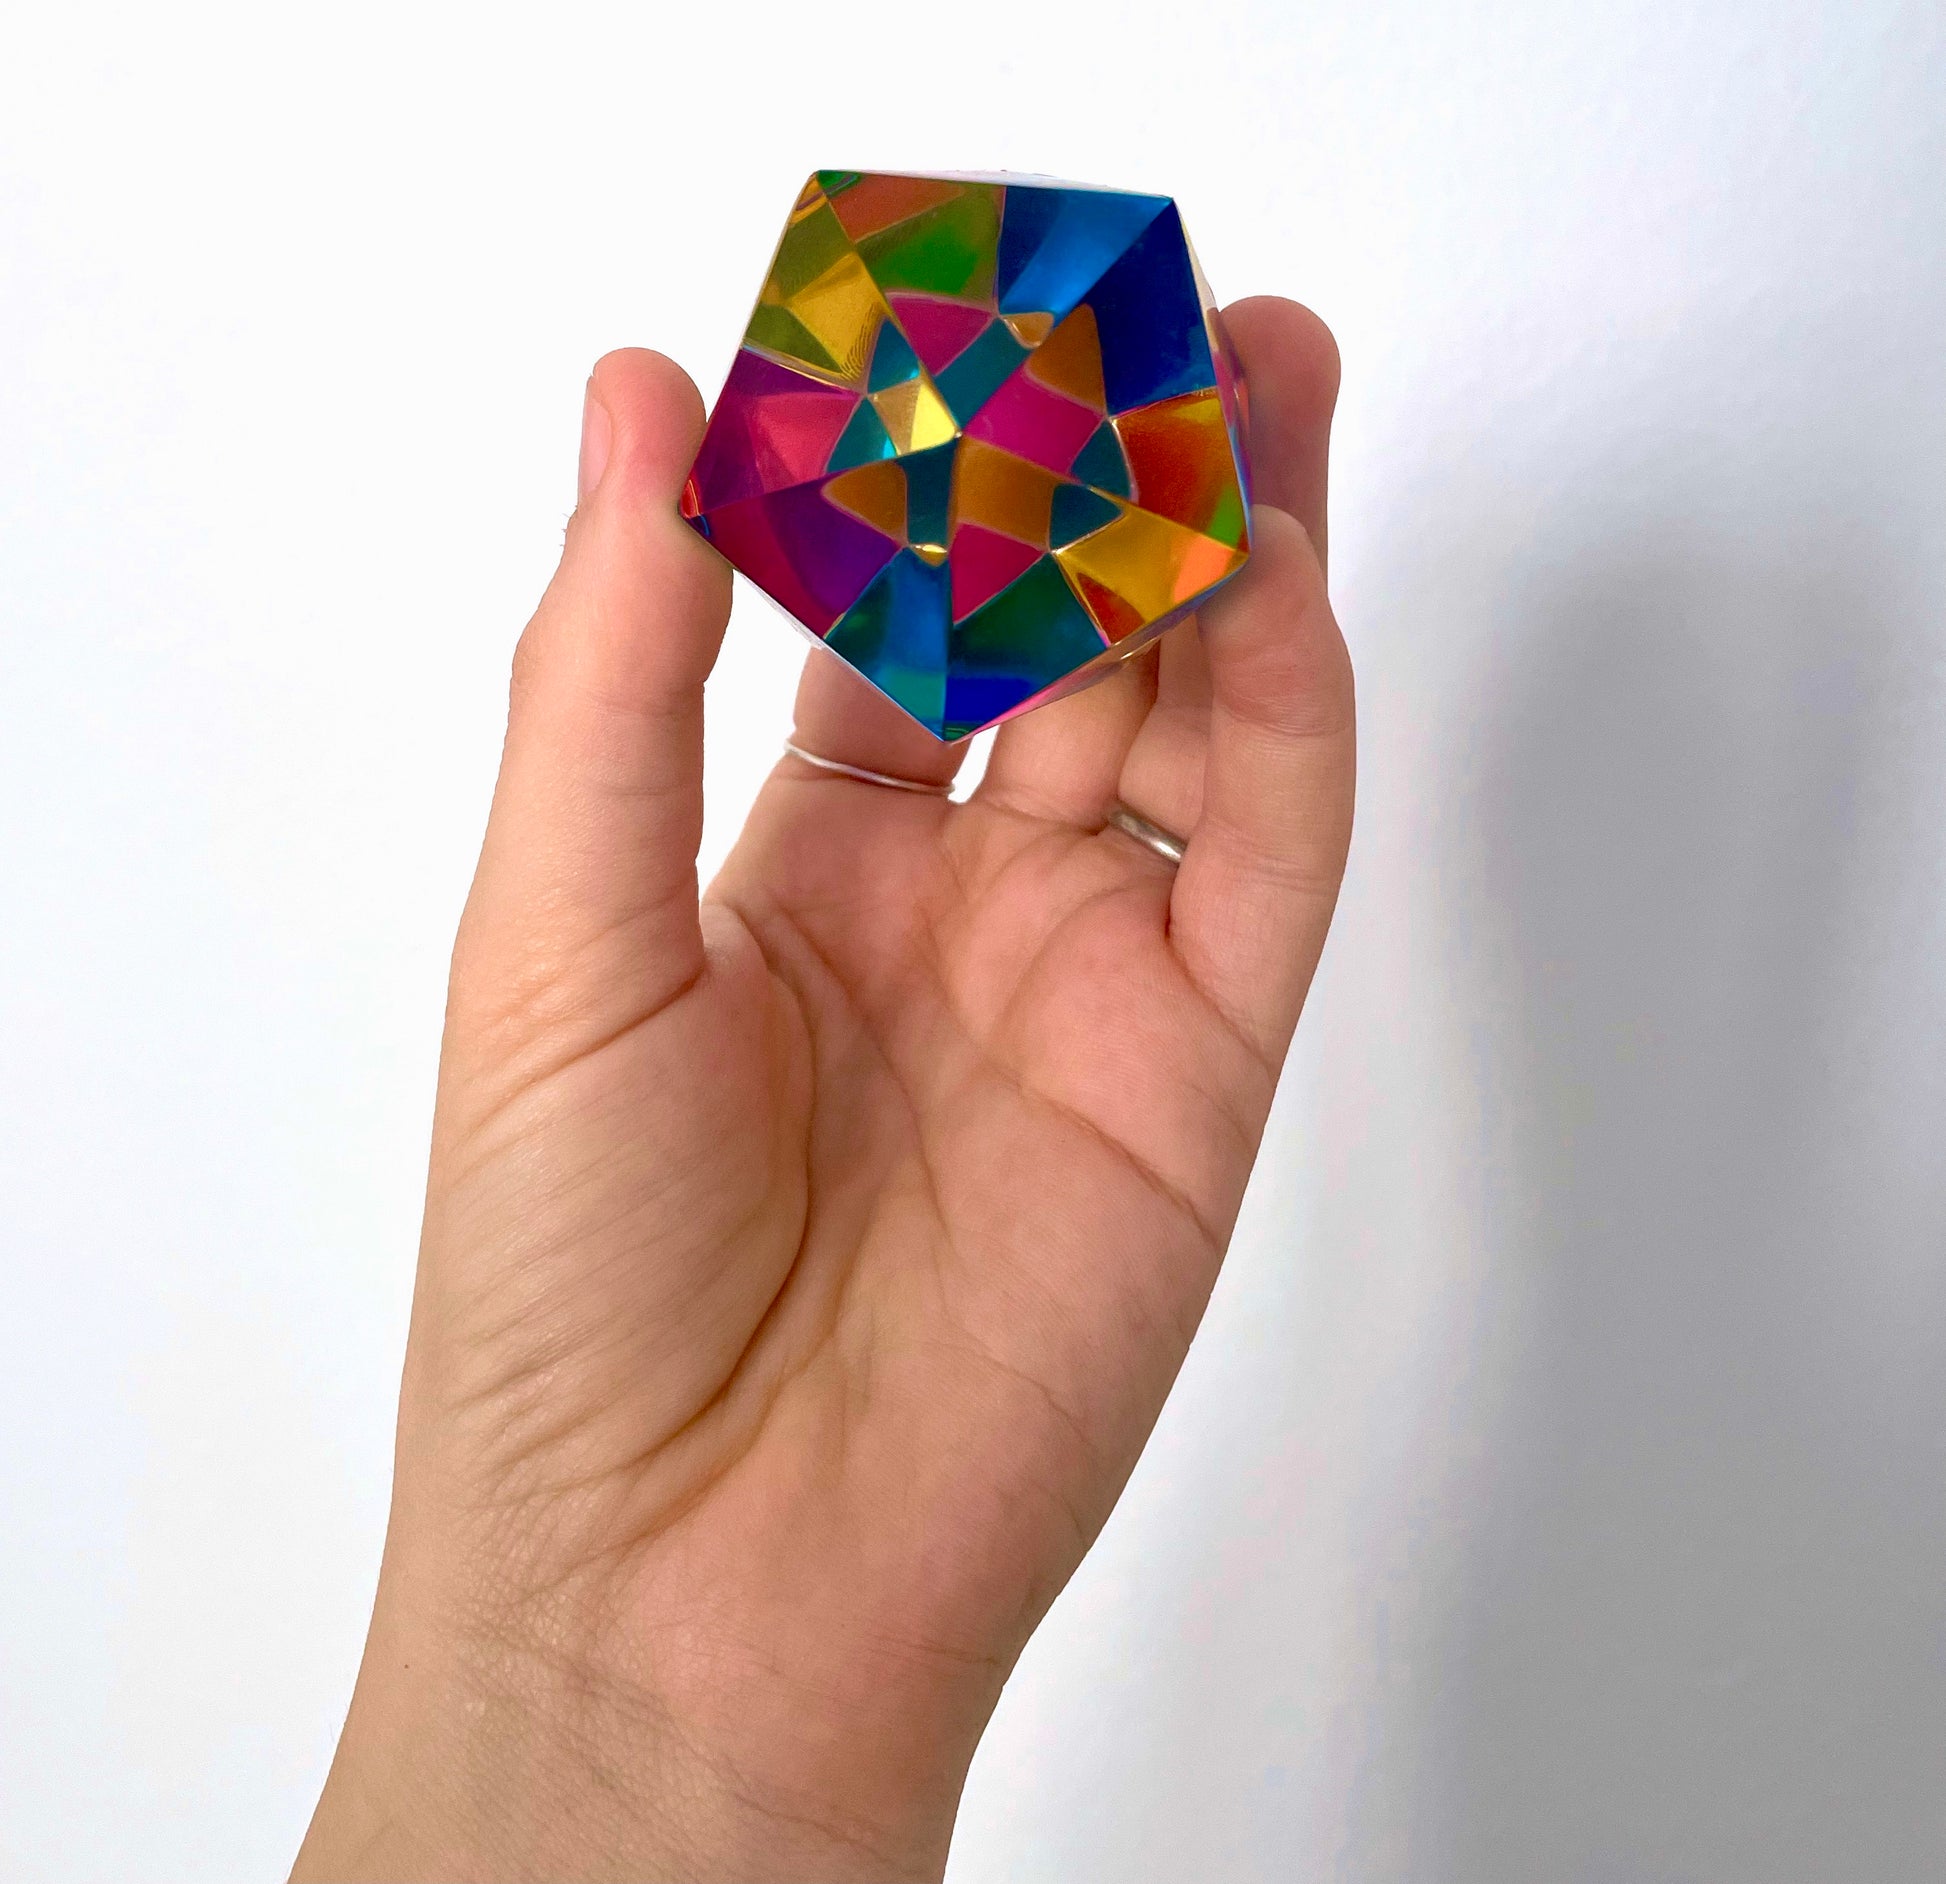 THE MOTUS - CMY Cubes